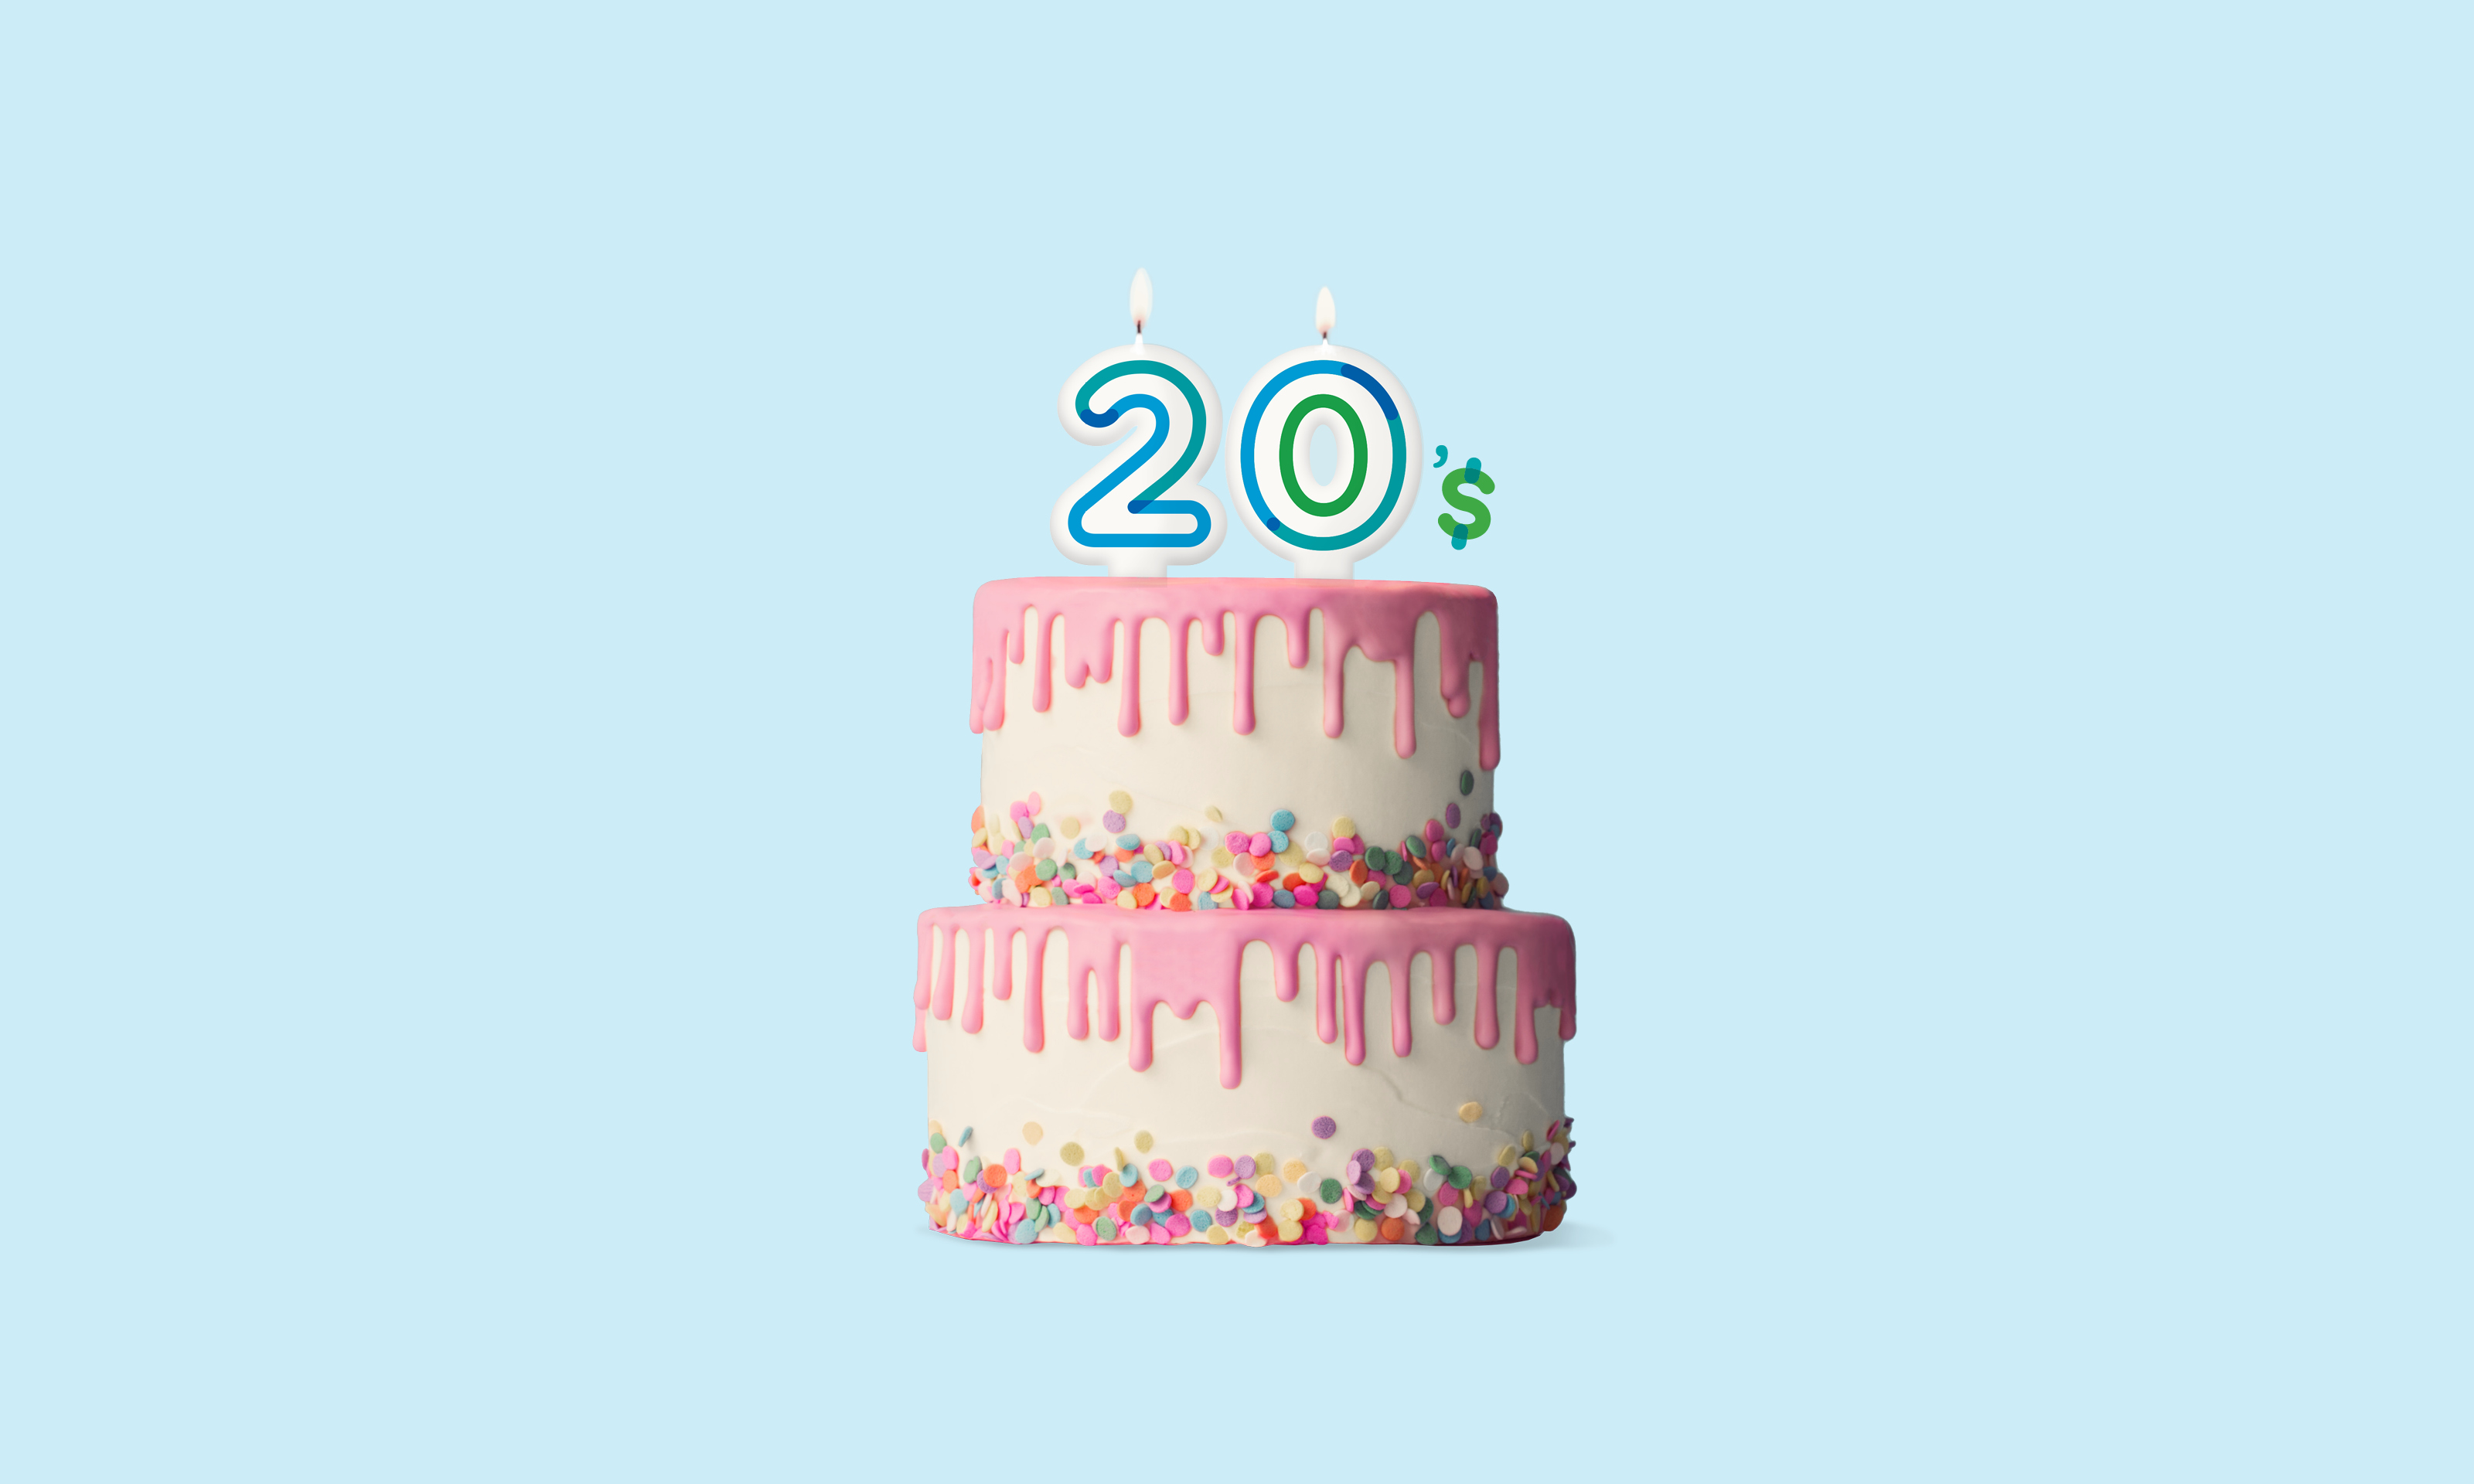 super in my 20's birthday cake